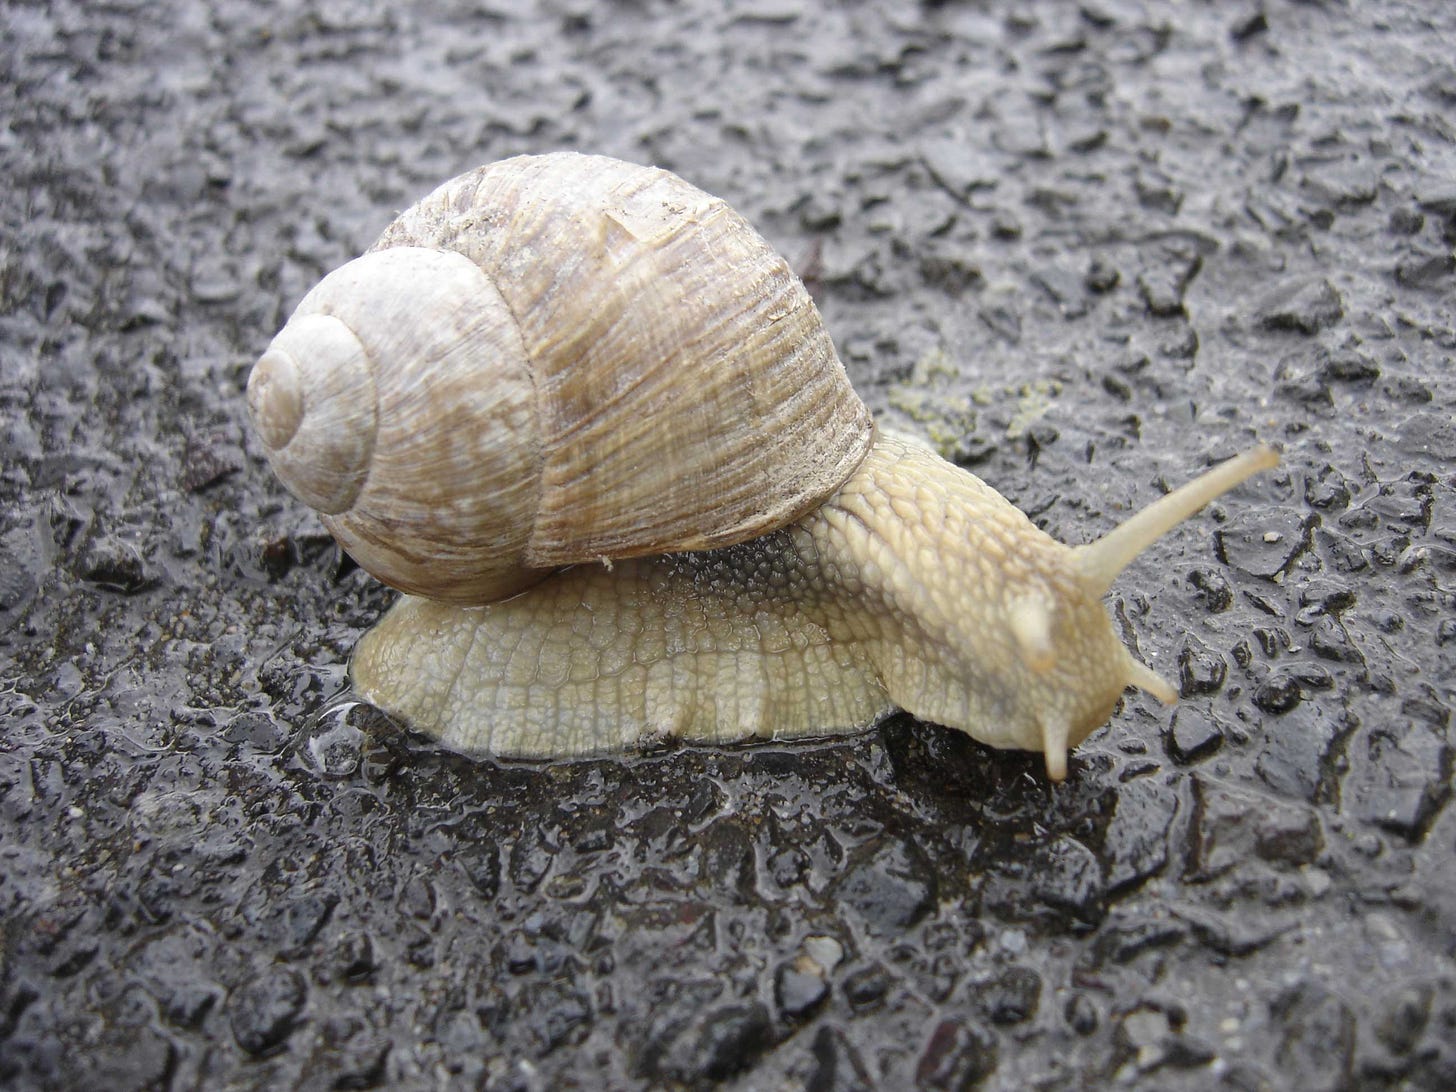 File:Snail.jpg - Wikimedia Commons